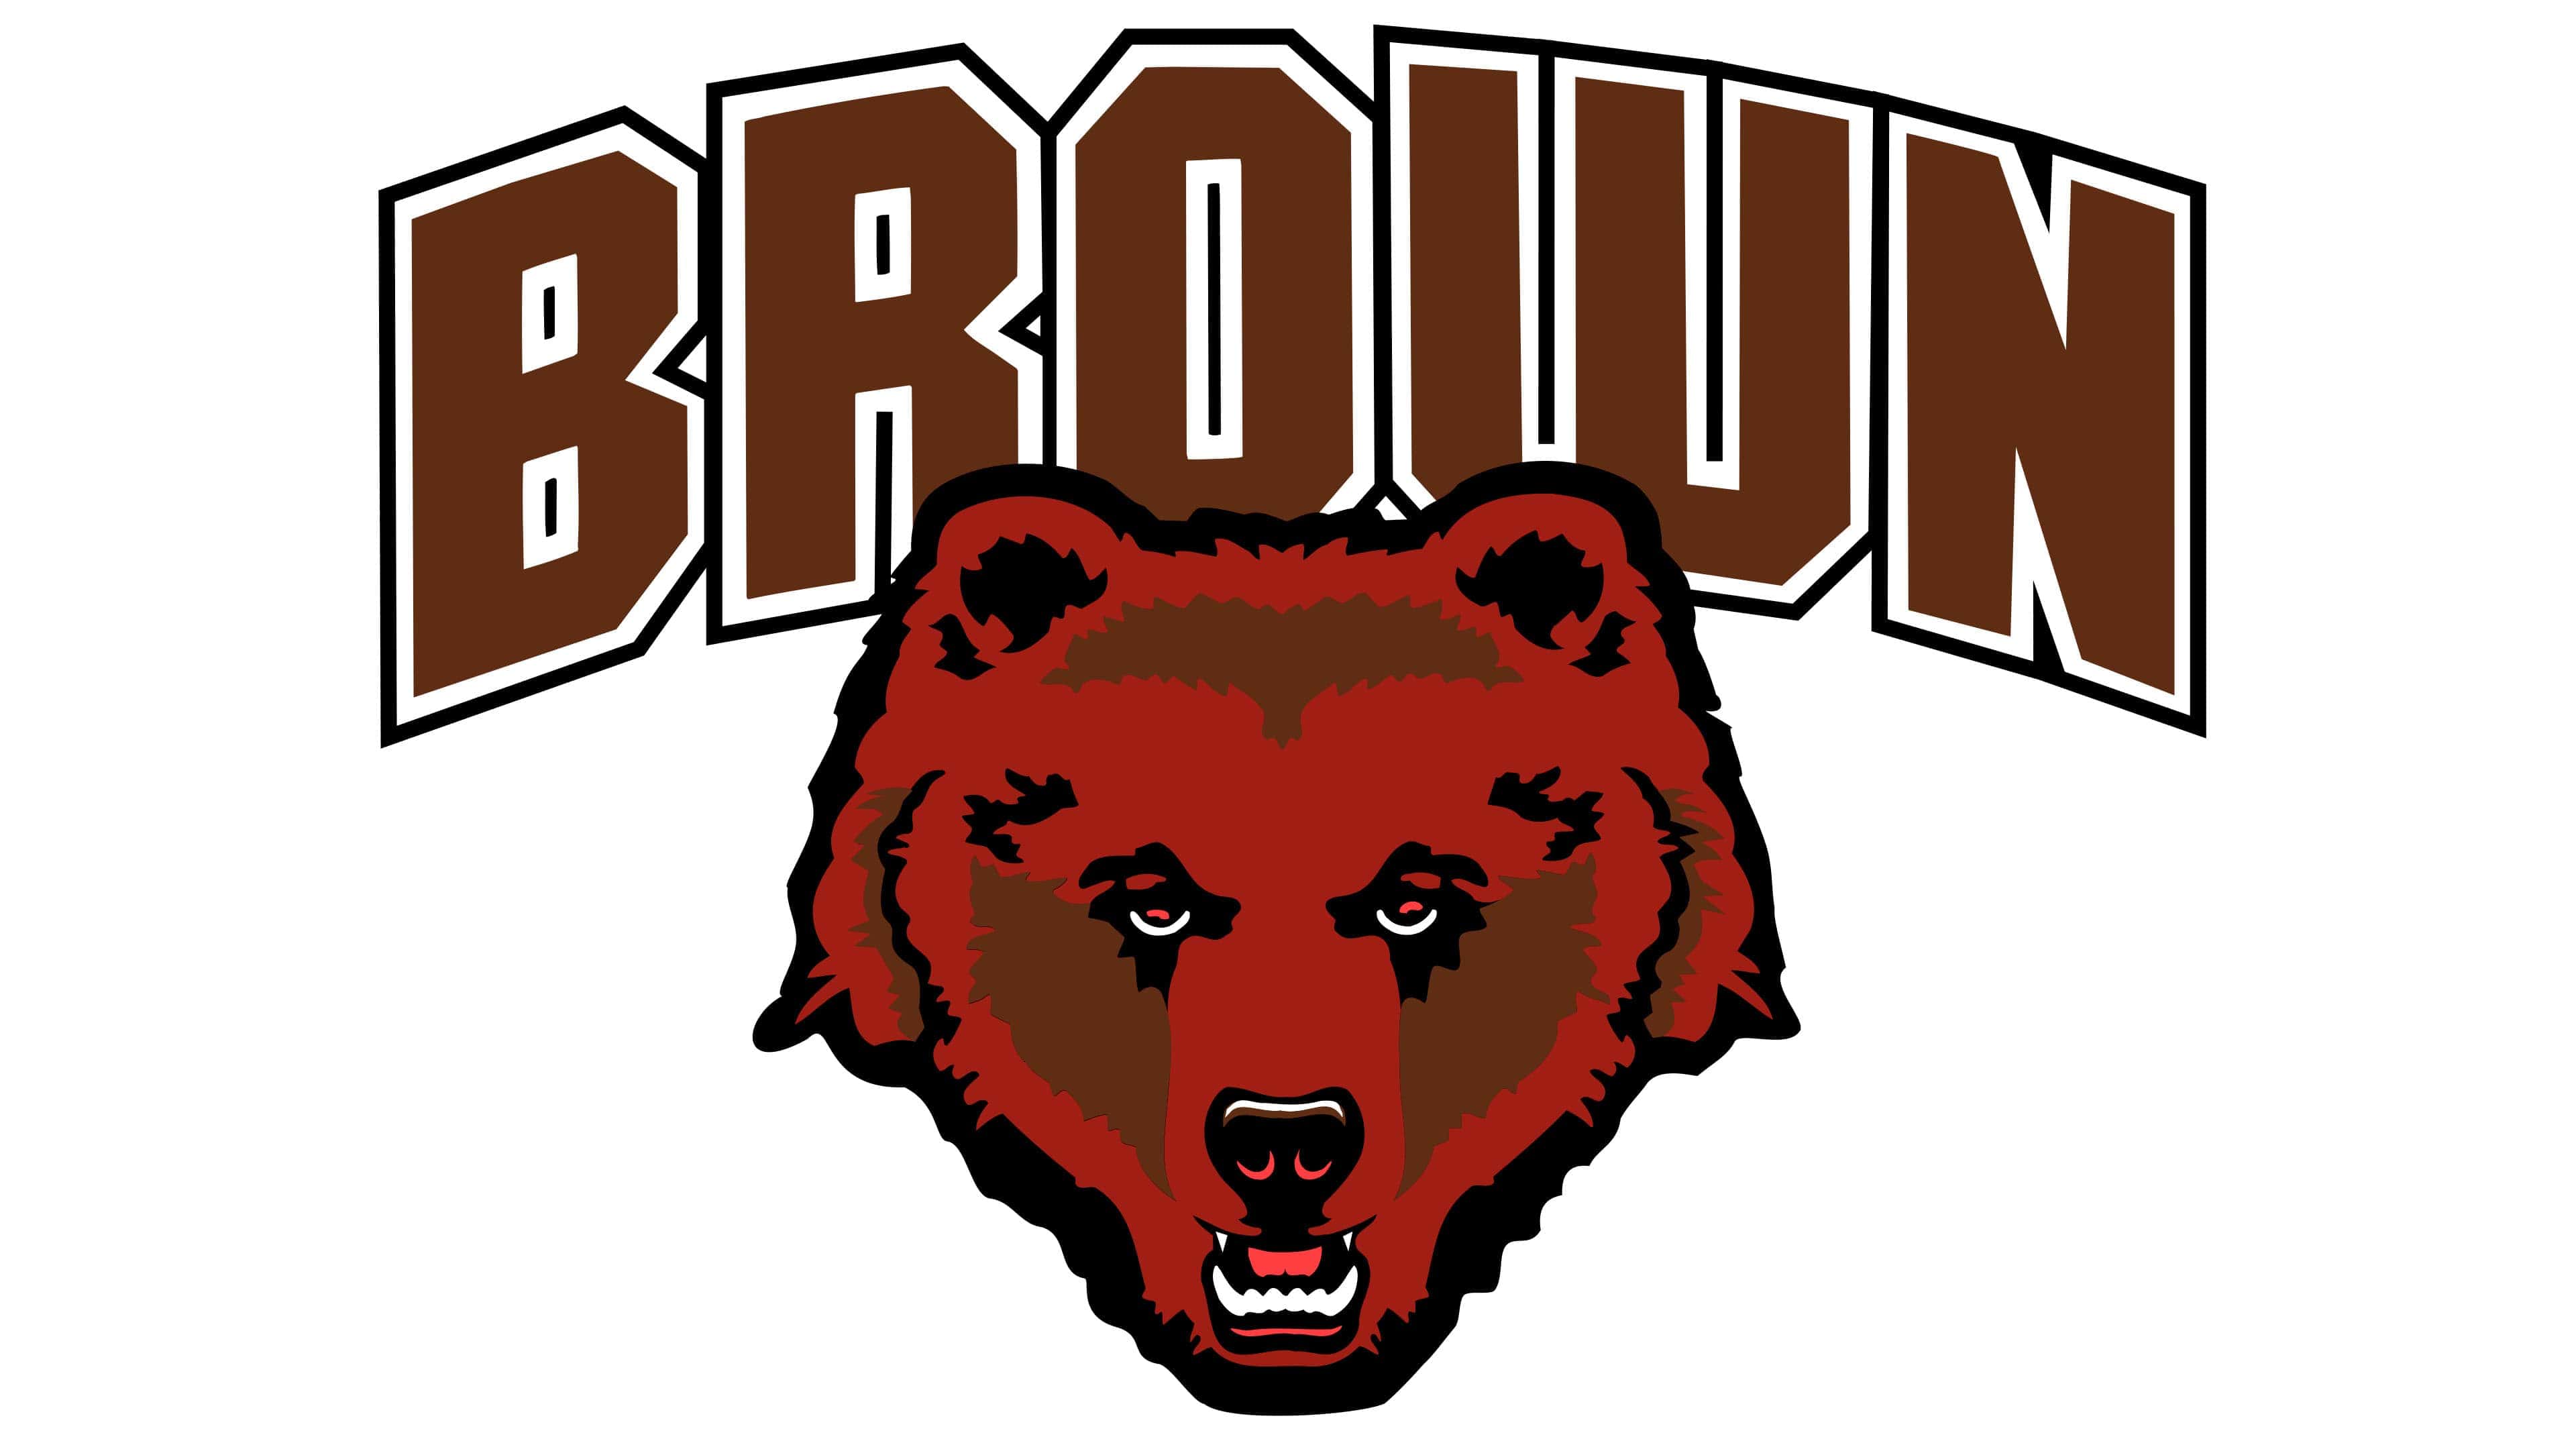 Brown University Seal